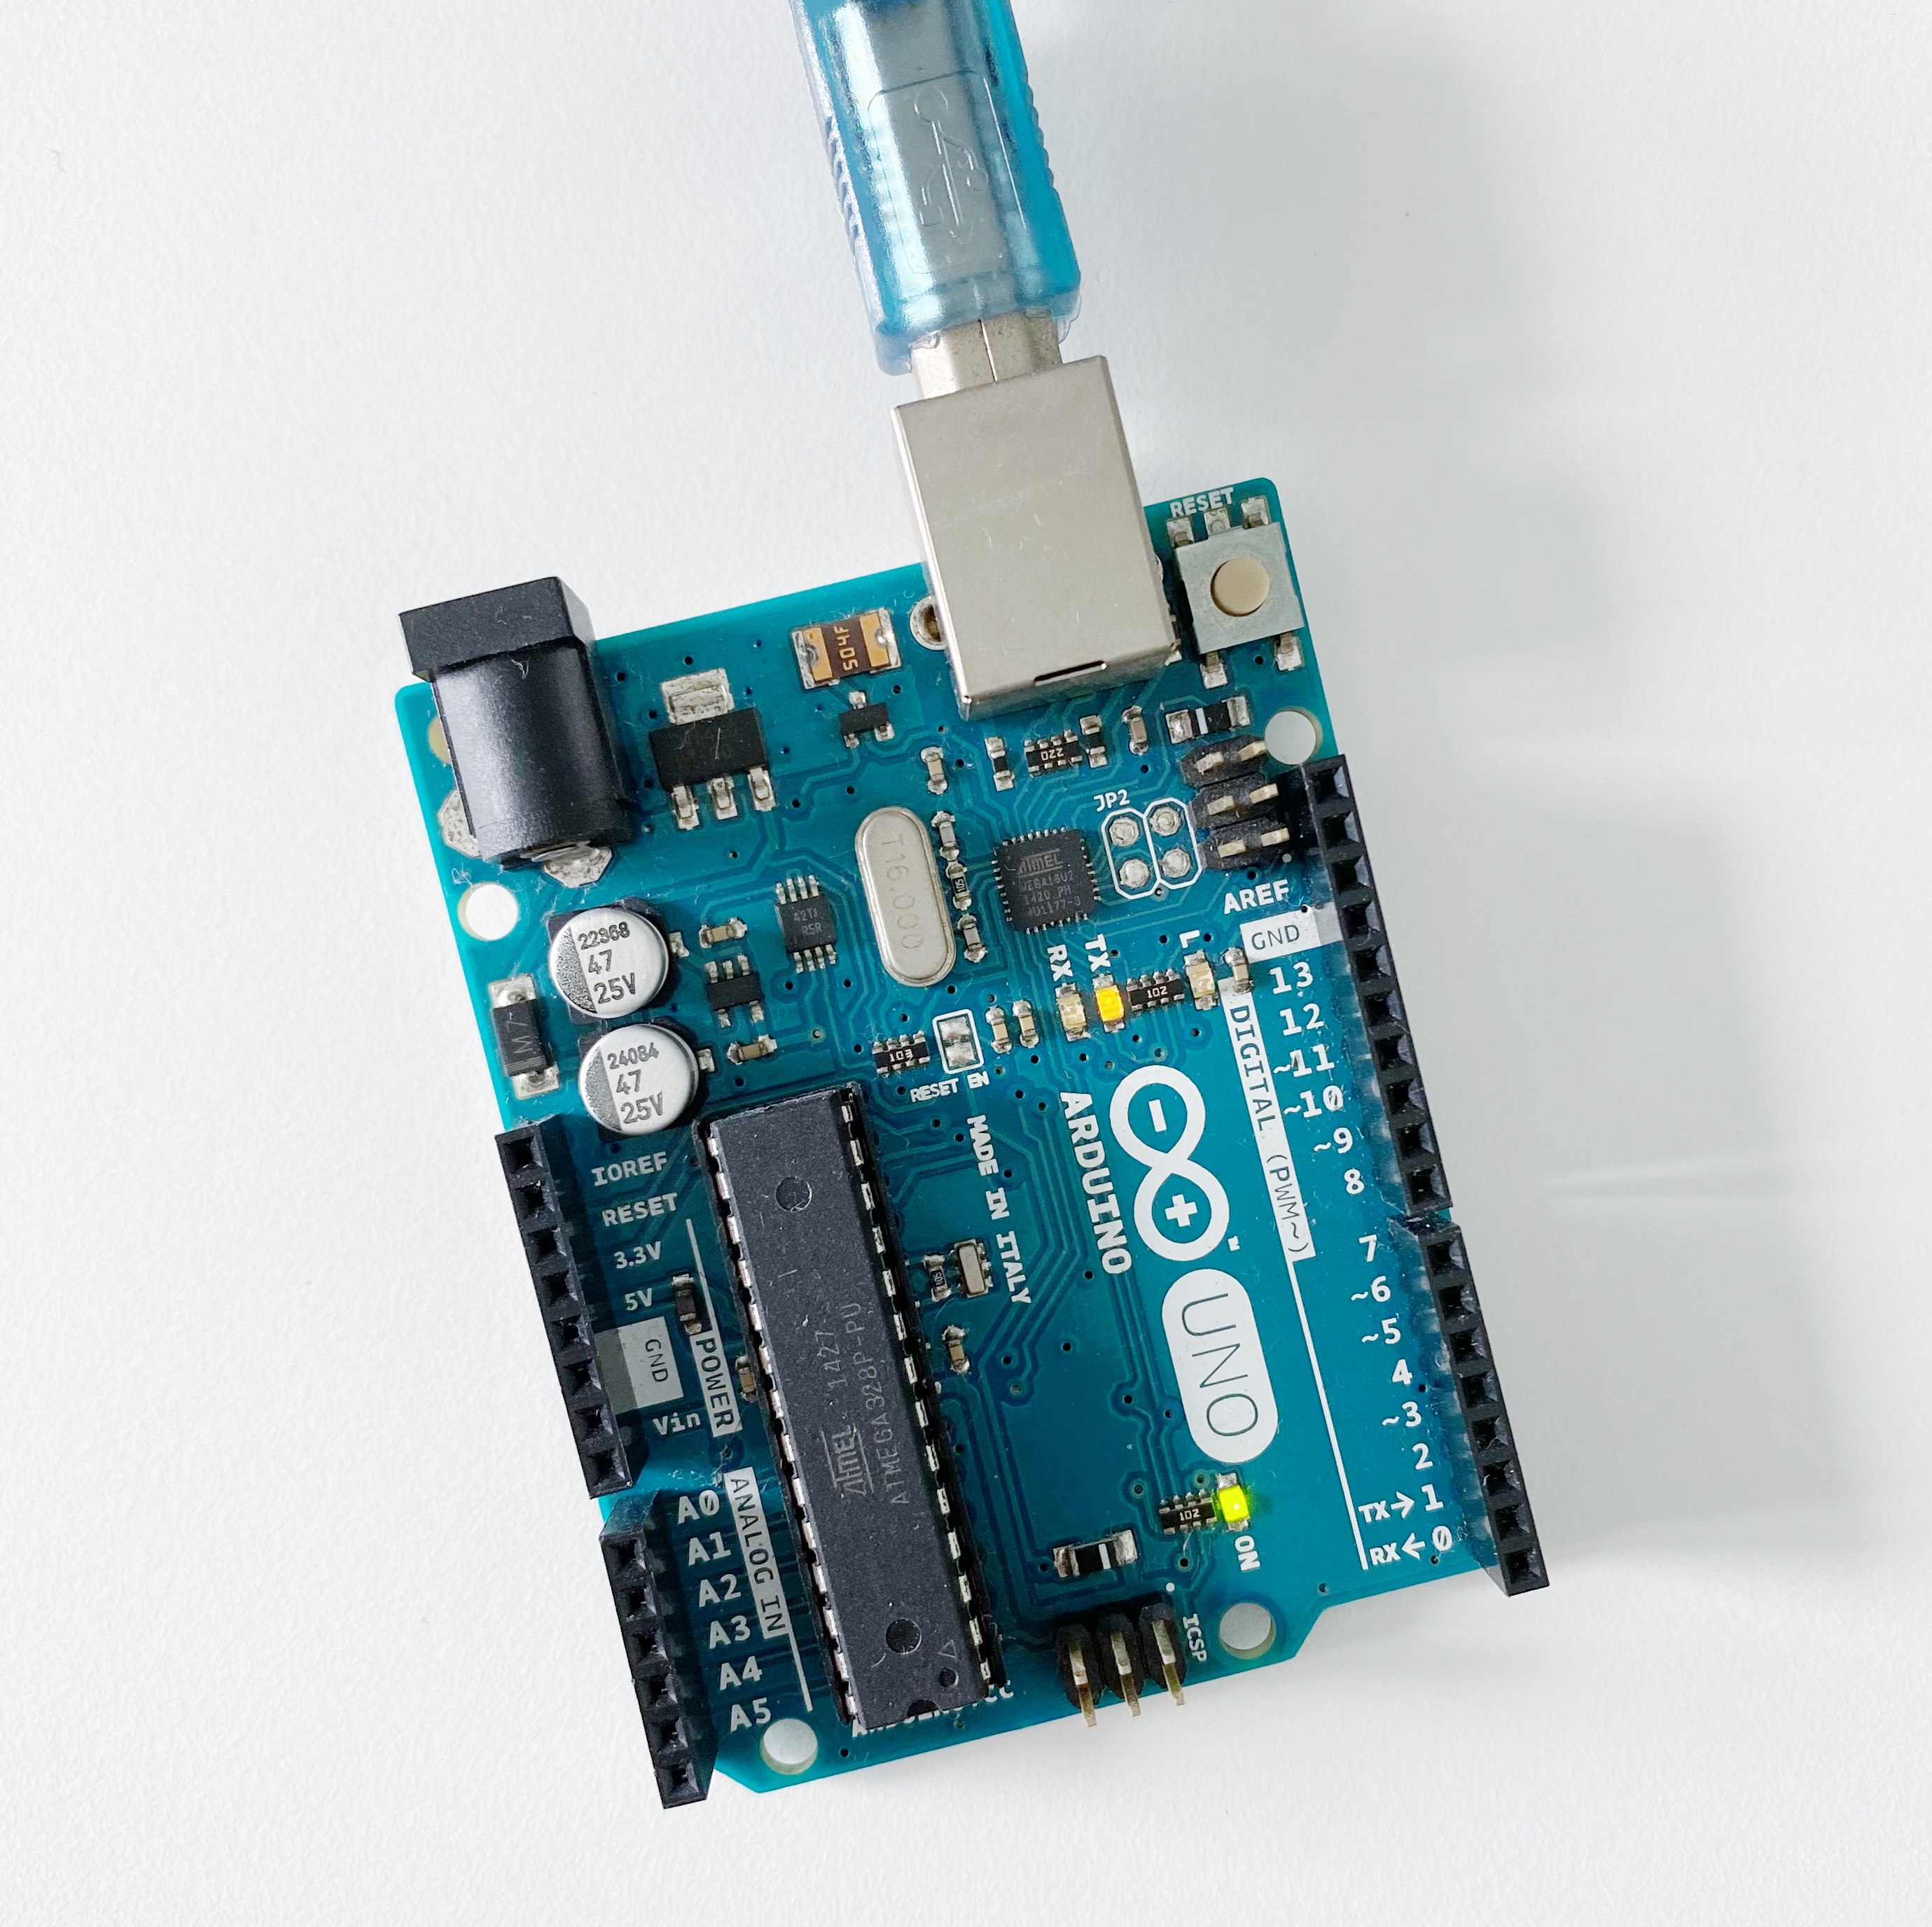 Bit mask with Arduino on UNO prototype